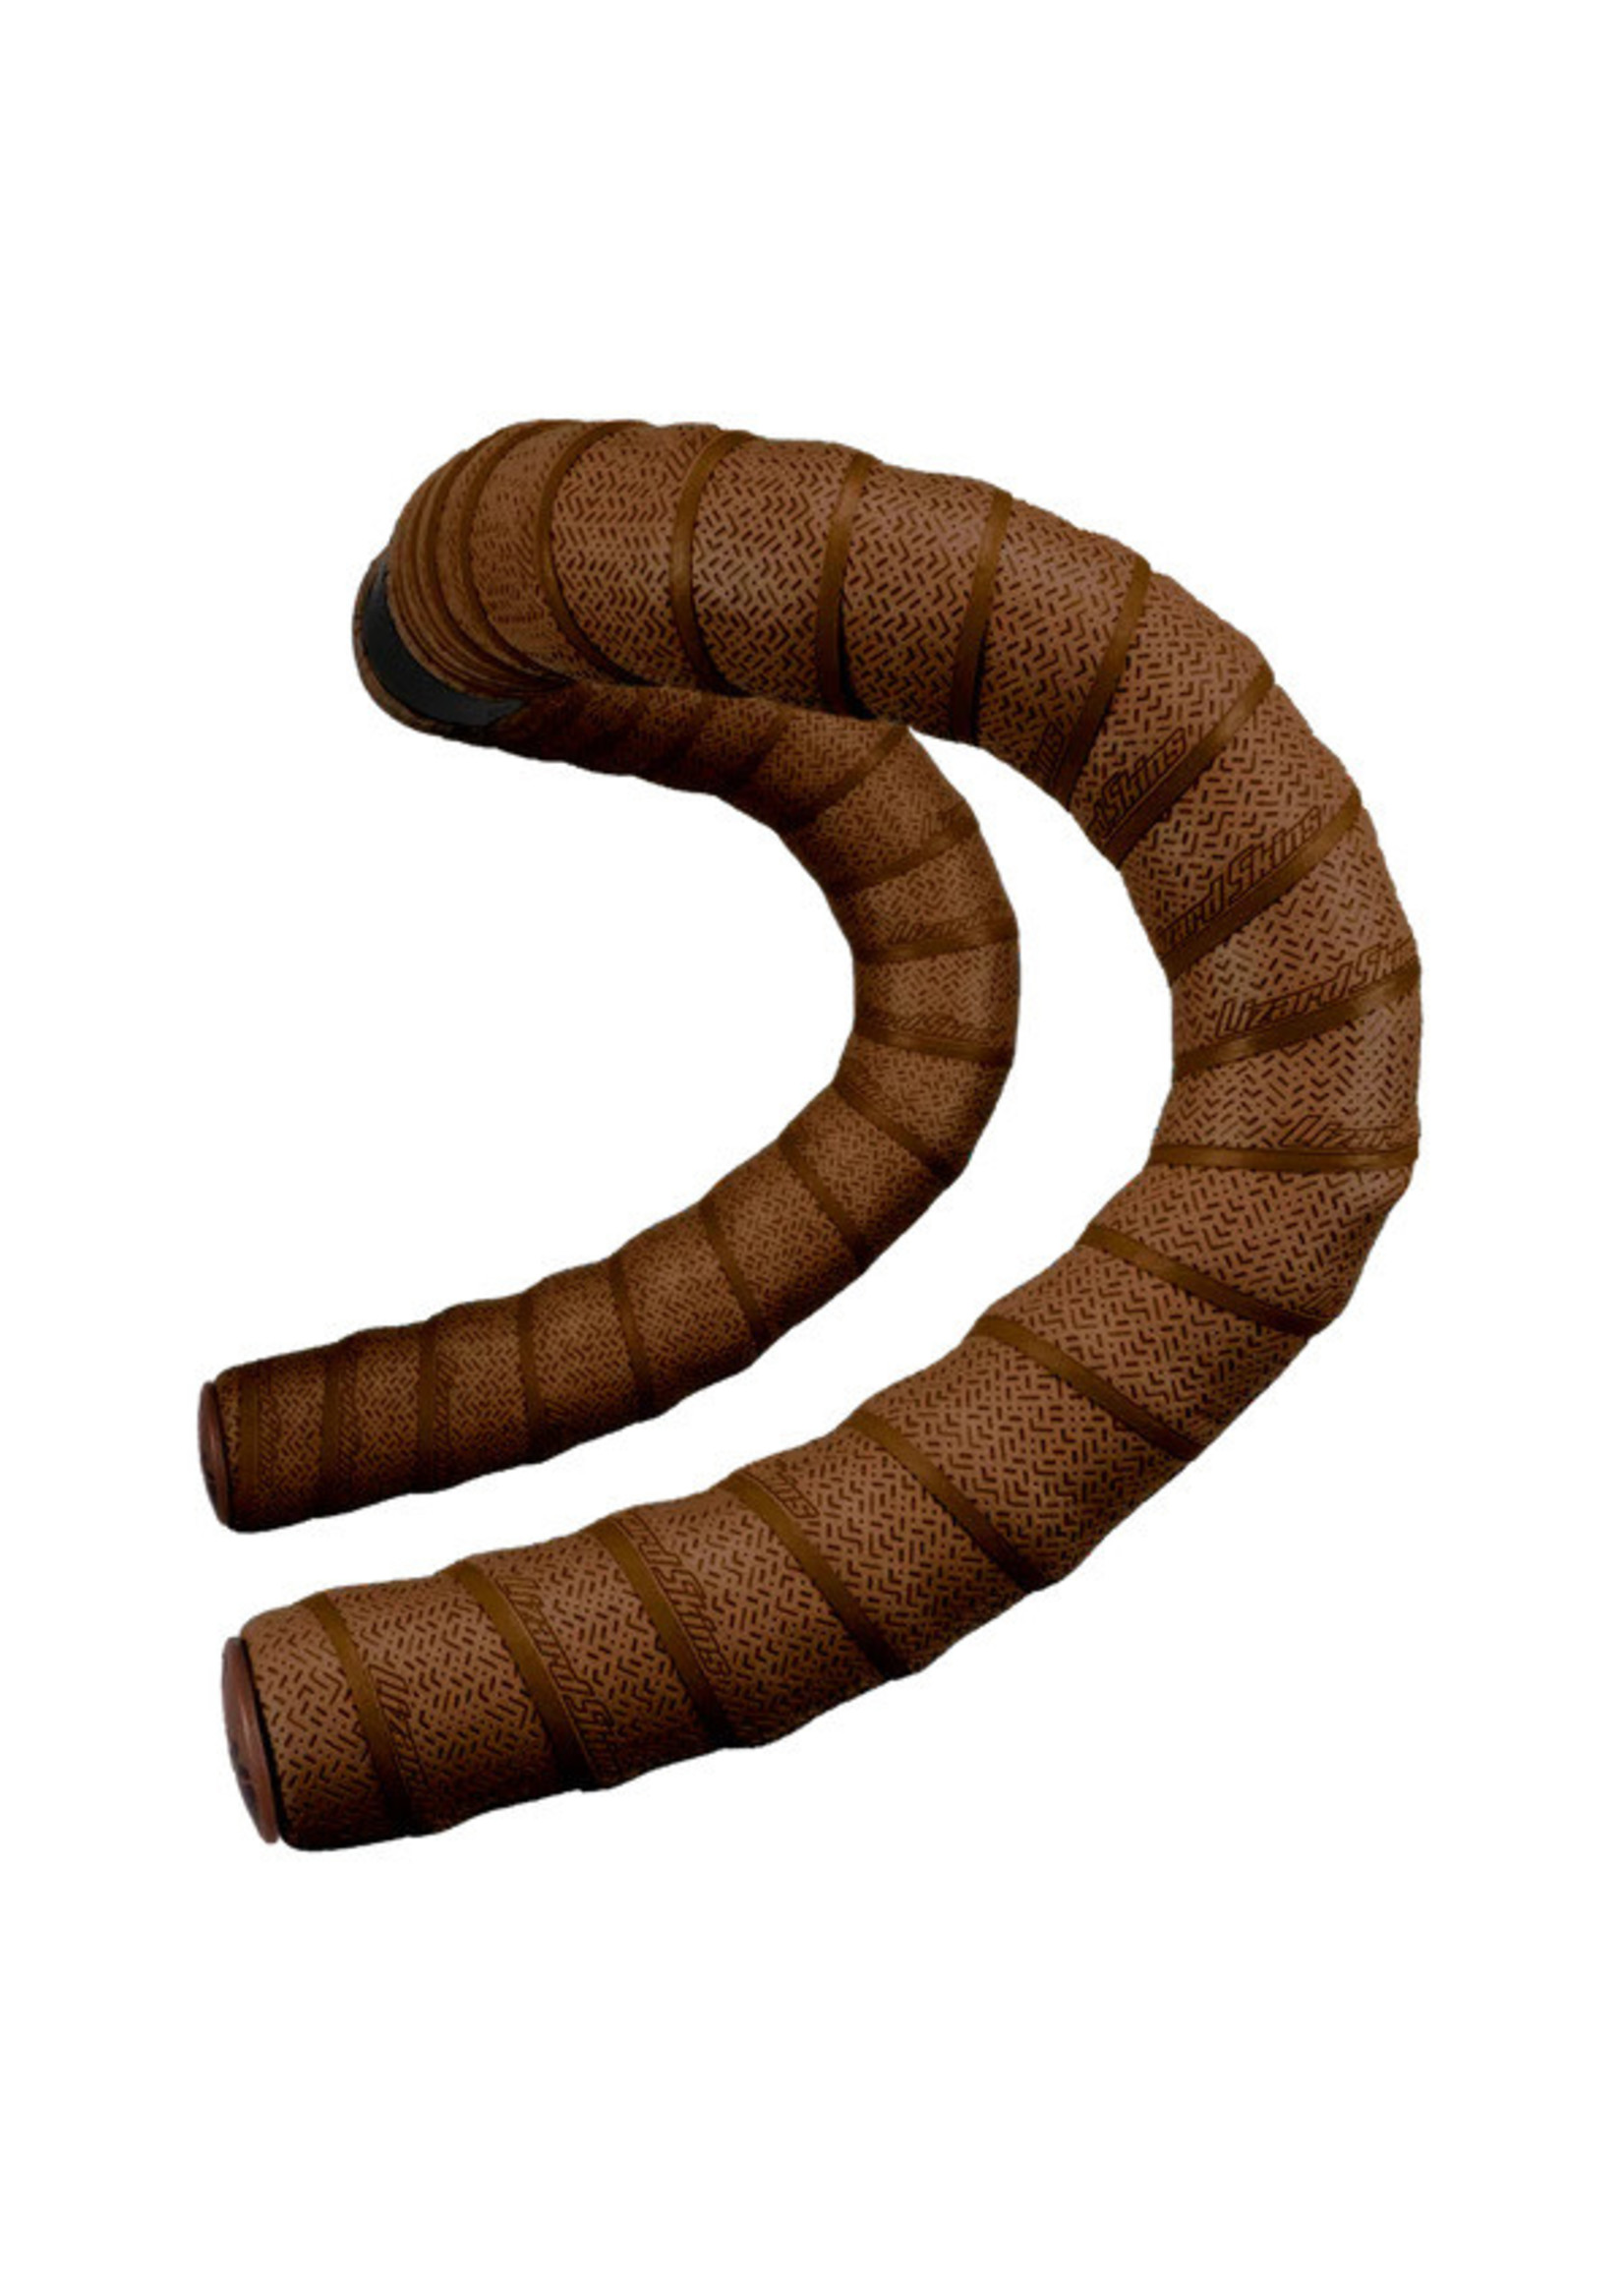 Lizard Skins LIZARD SKINS - Guidoline 2.5mm - Brun chocolat